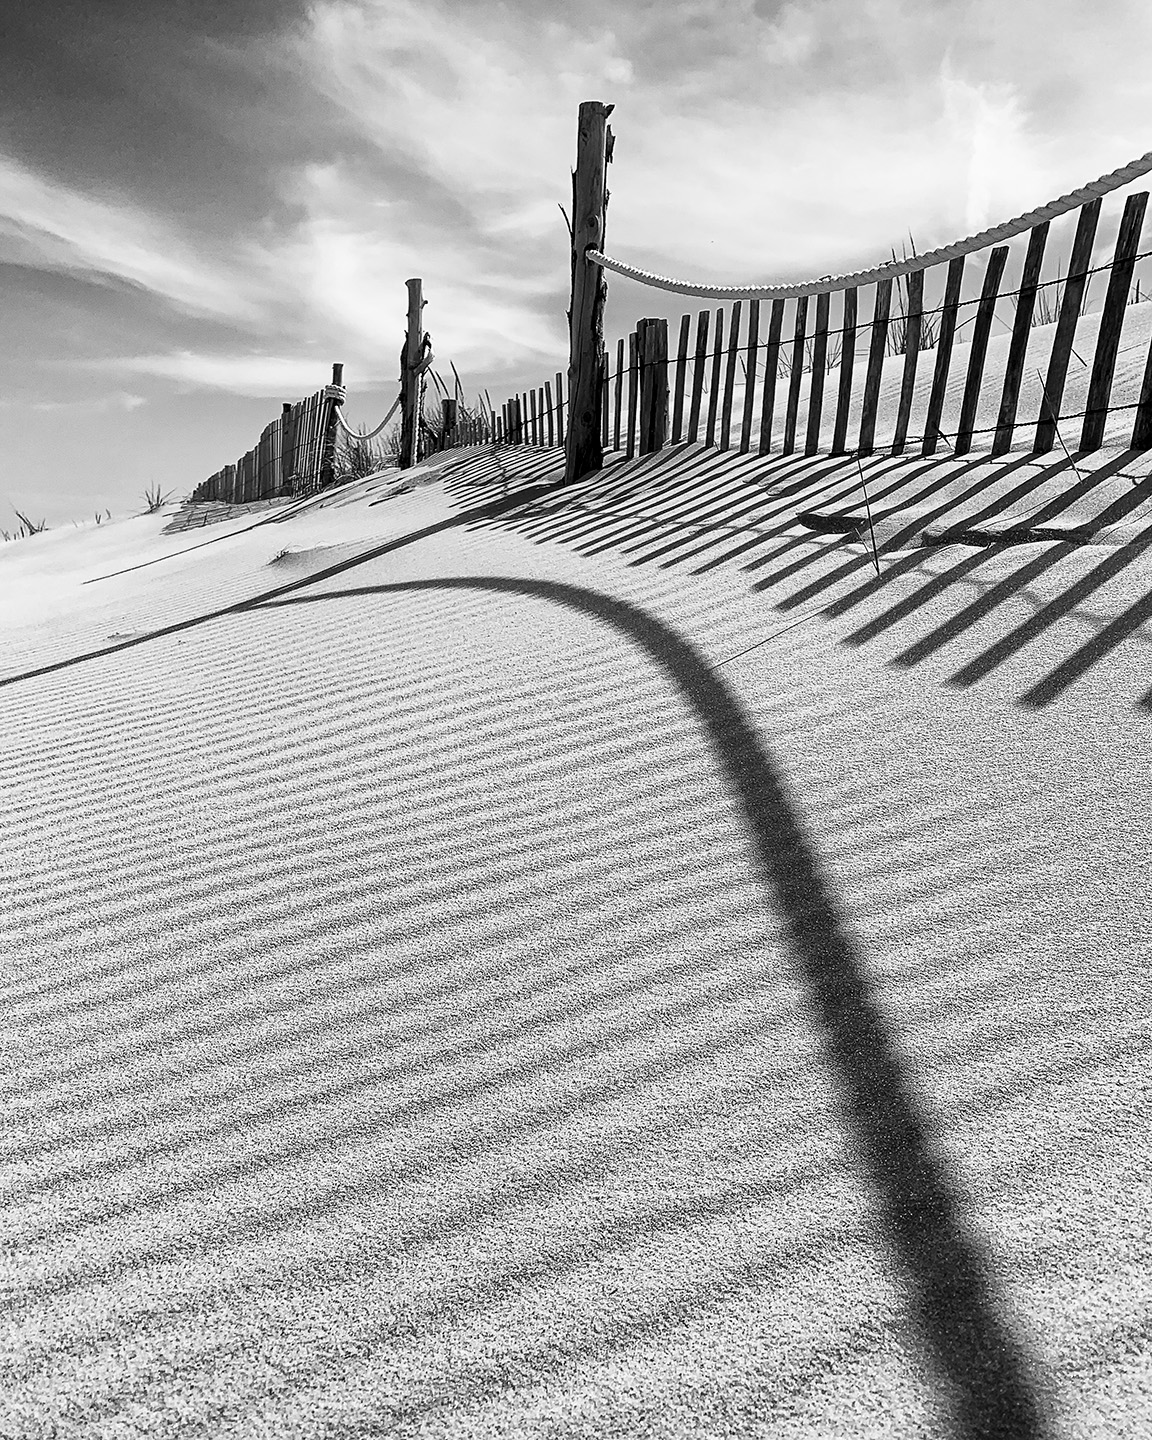 Lines in the Sand
Archival digital print
11″ x 14″
$80
Doug Miller